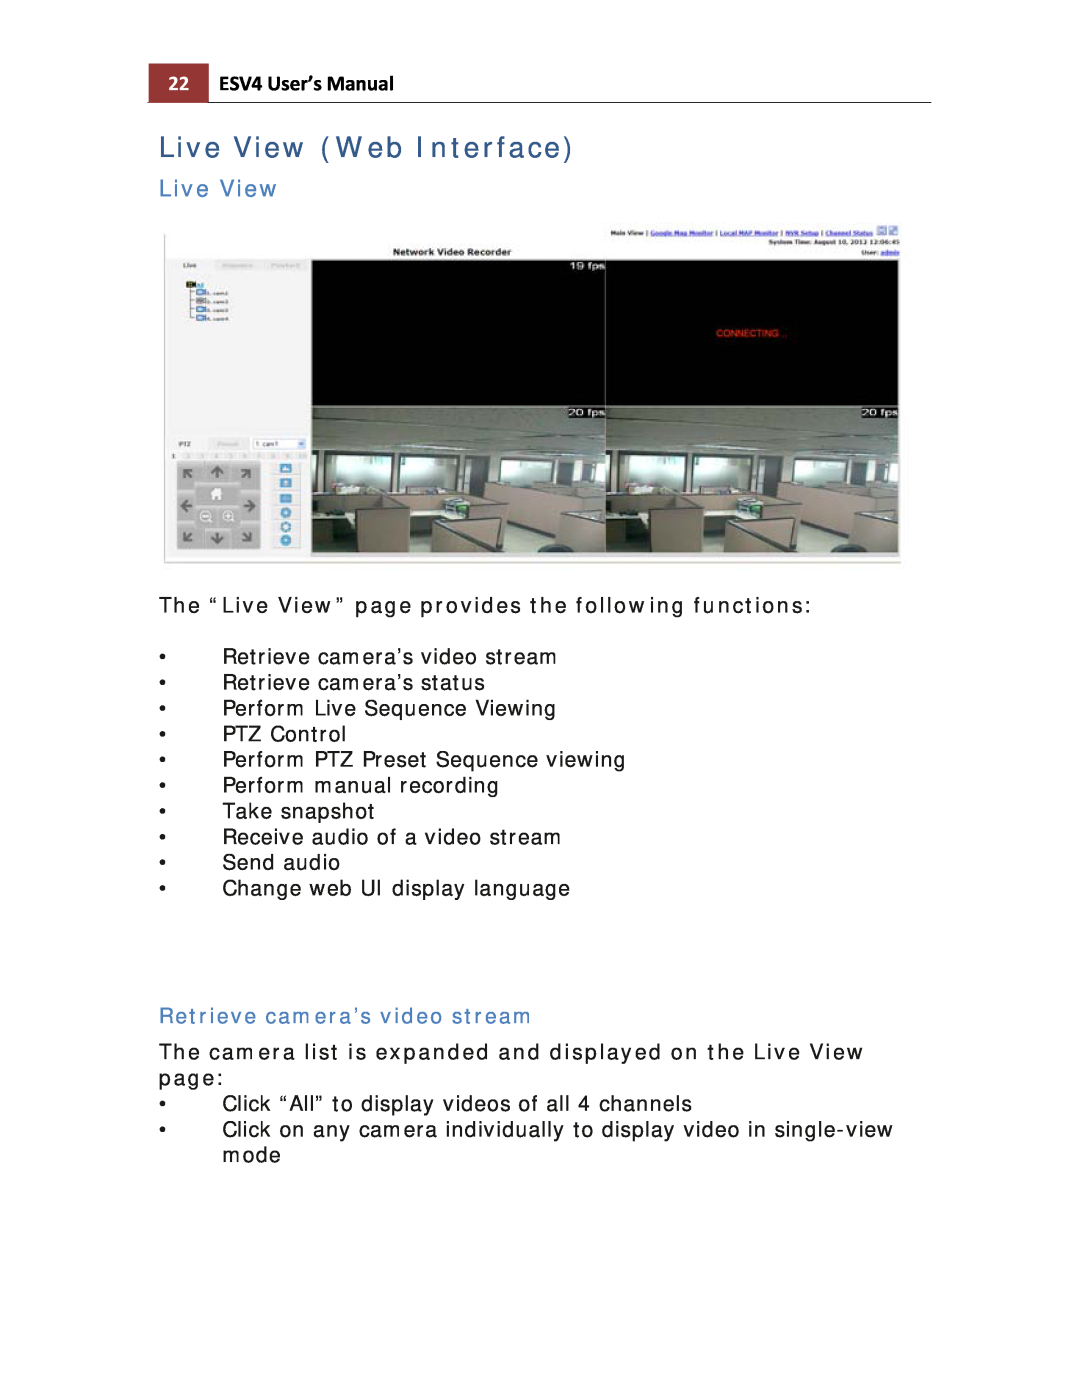 Toshiba ESV41T user manual Live View Web Interface, 22ESV4 User’s Manual, Retrieve camera’s video stream 